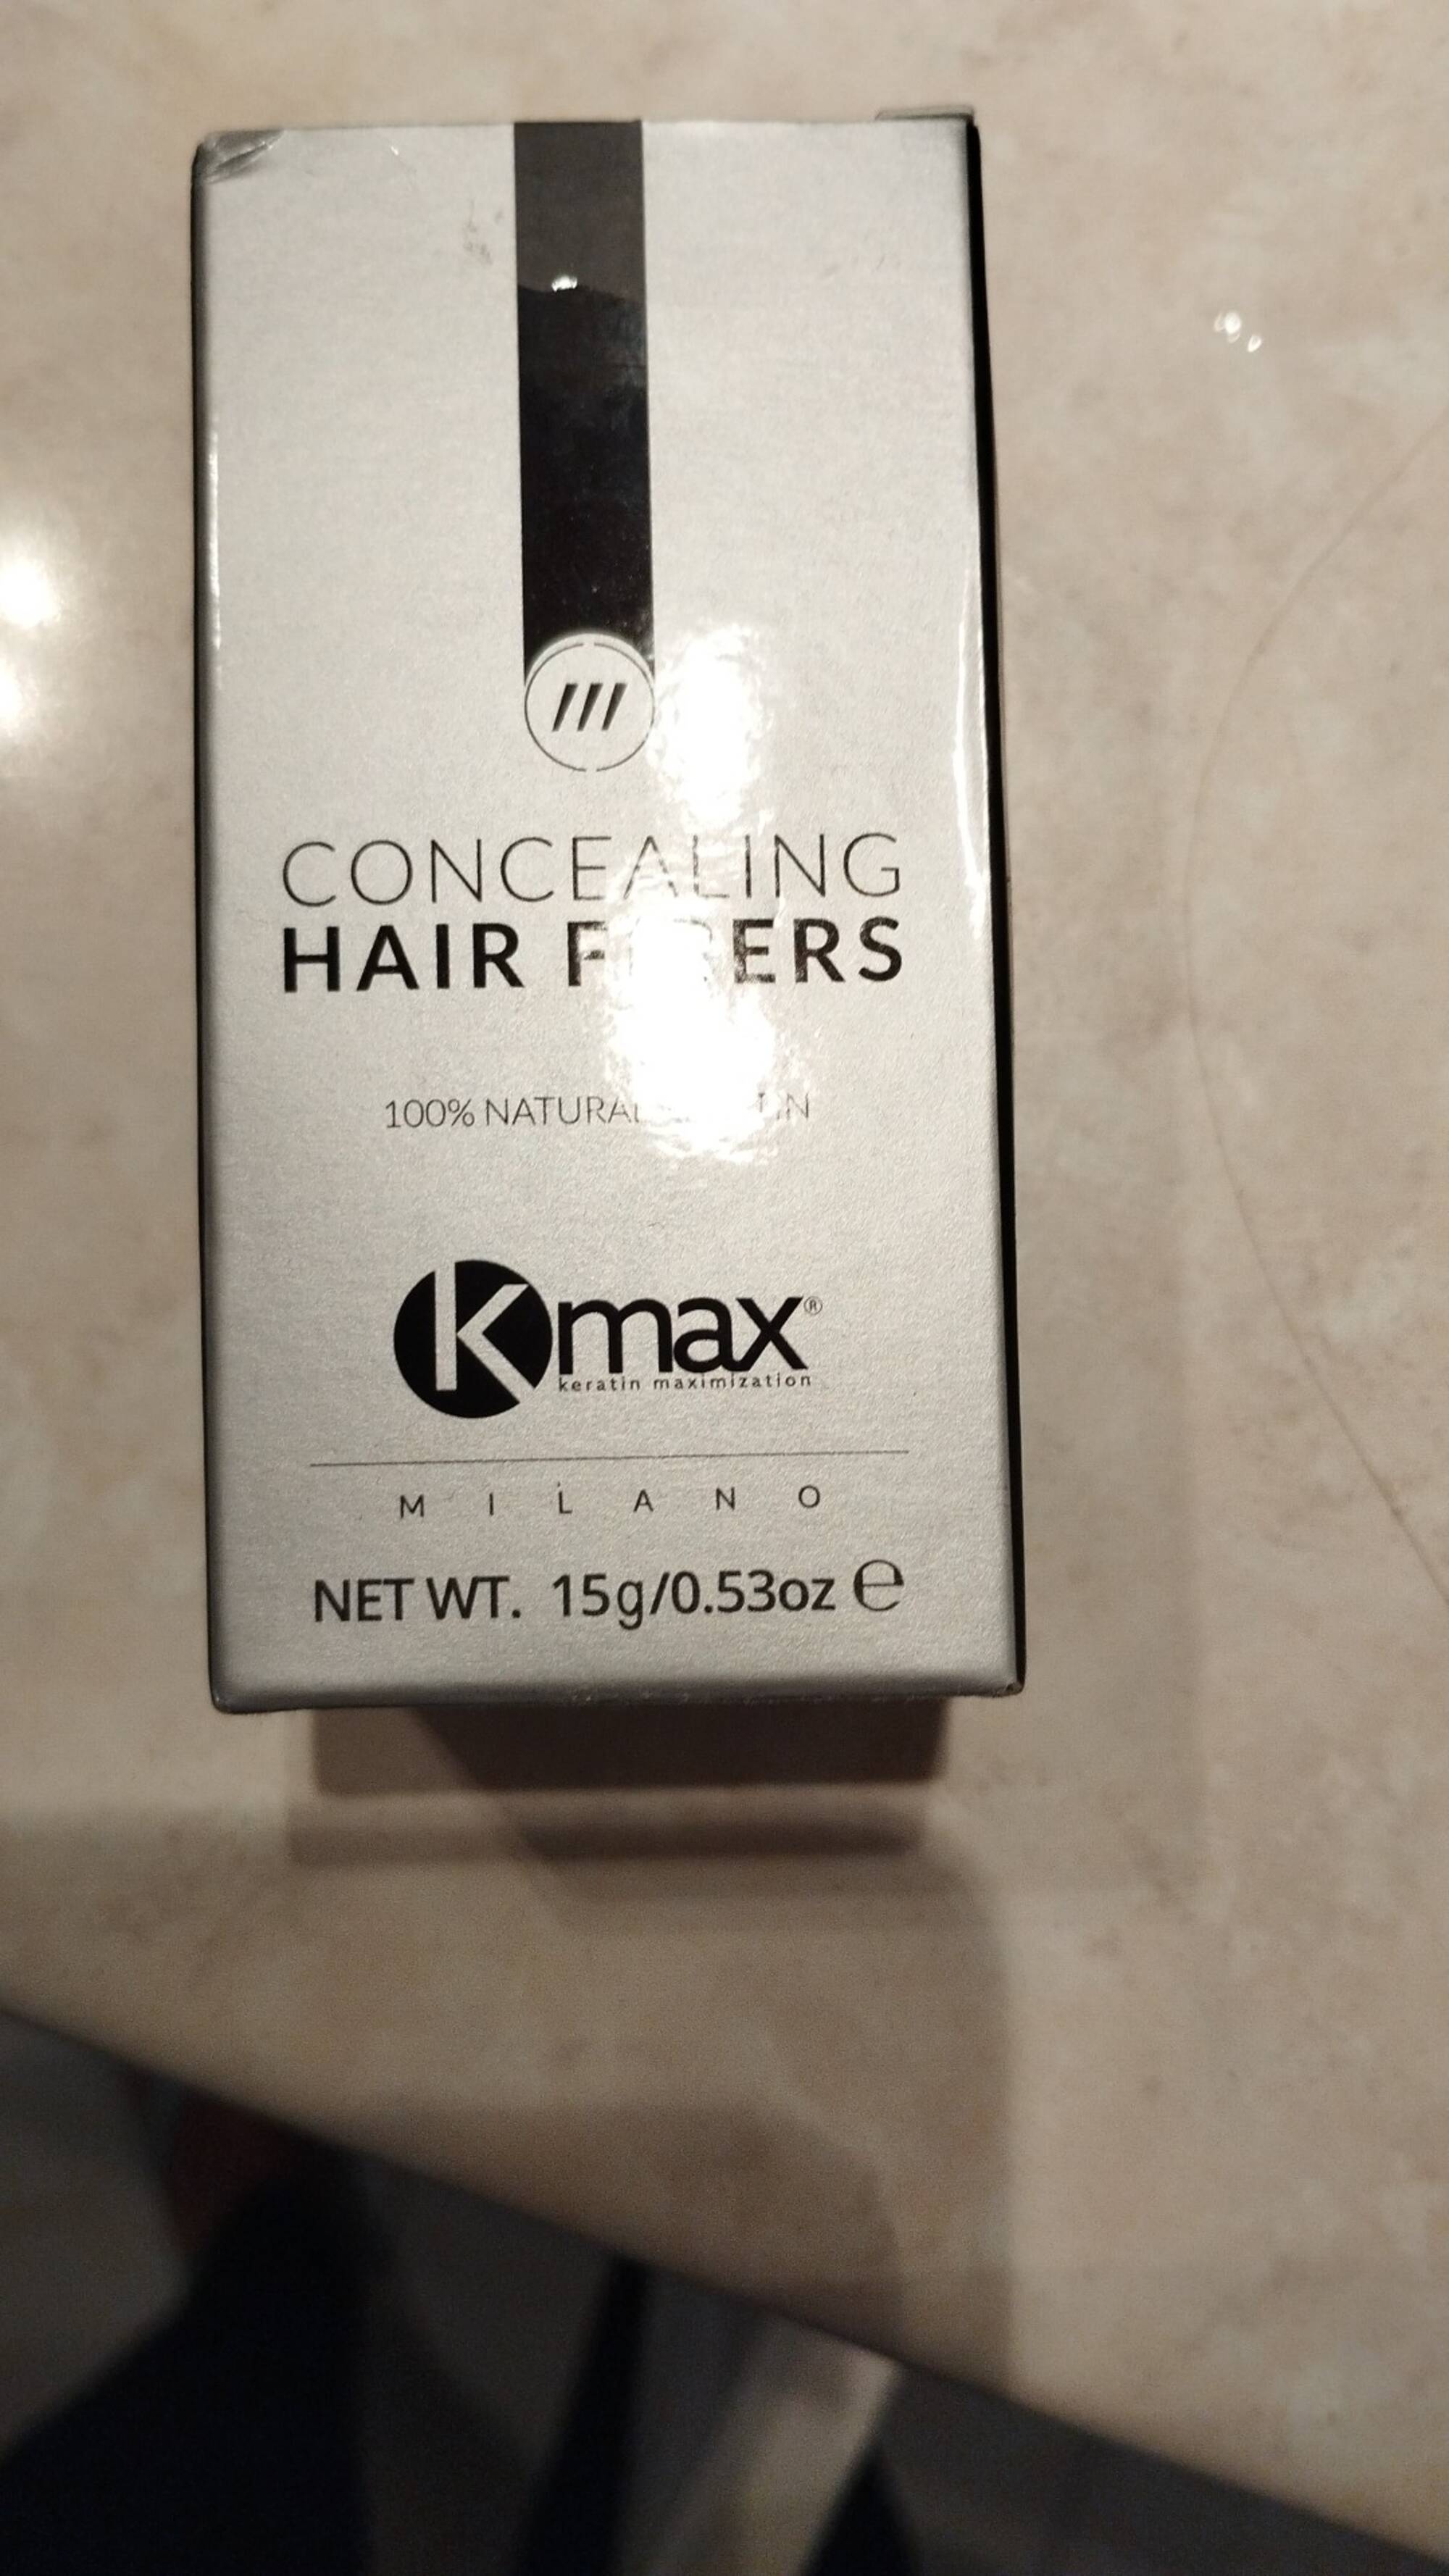 K-MAX - Concealing hair fibers